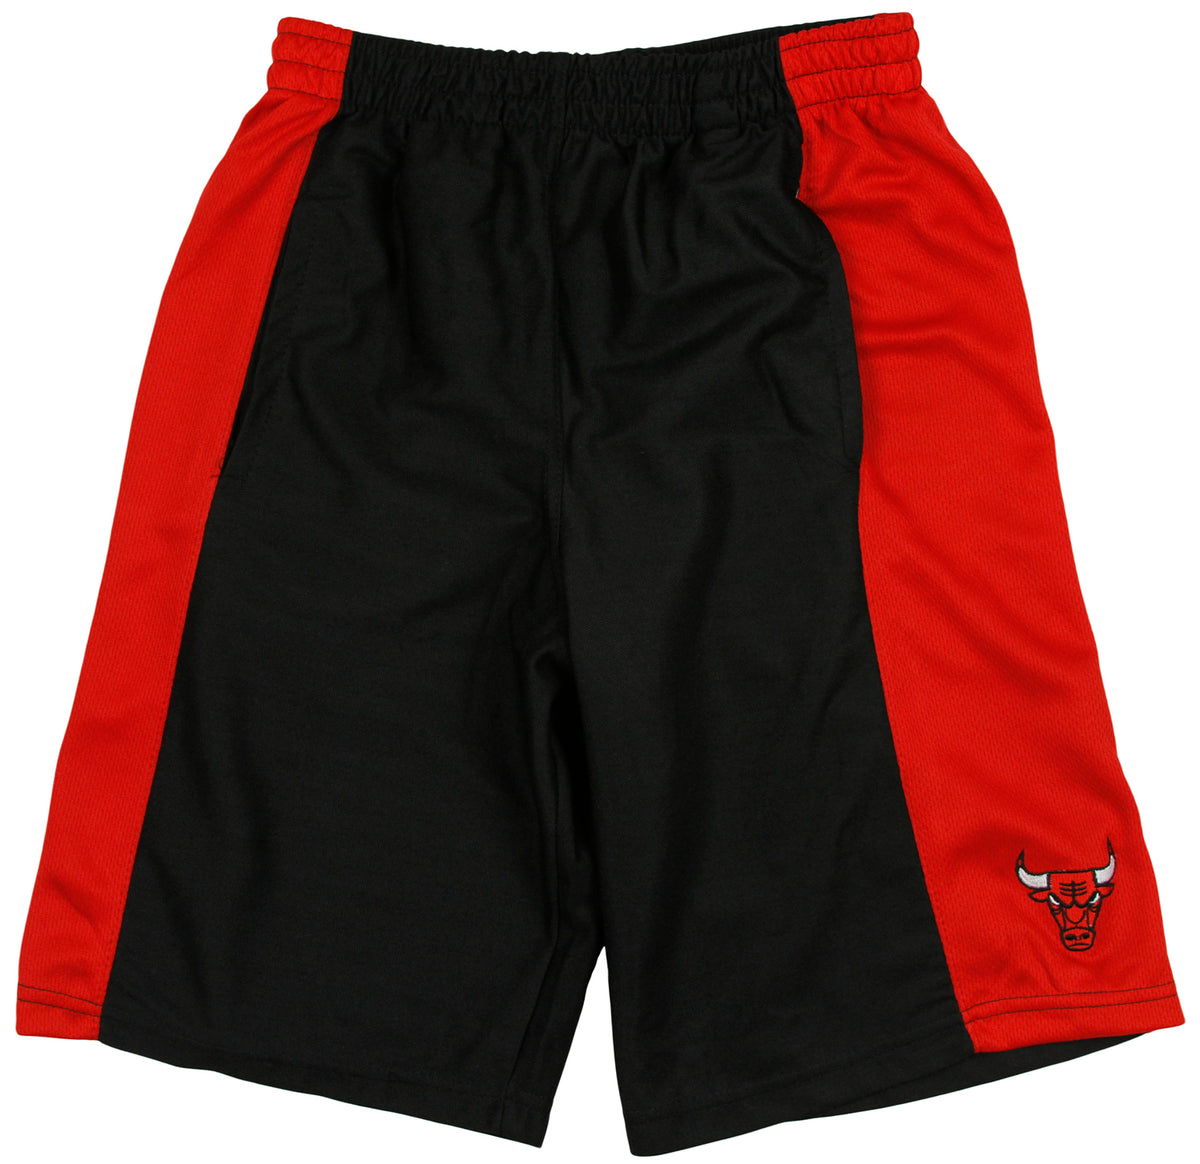 Zipway NBA Men's Chicago Bulls Pixel Single Layer Athletic Shorts